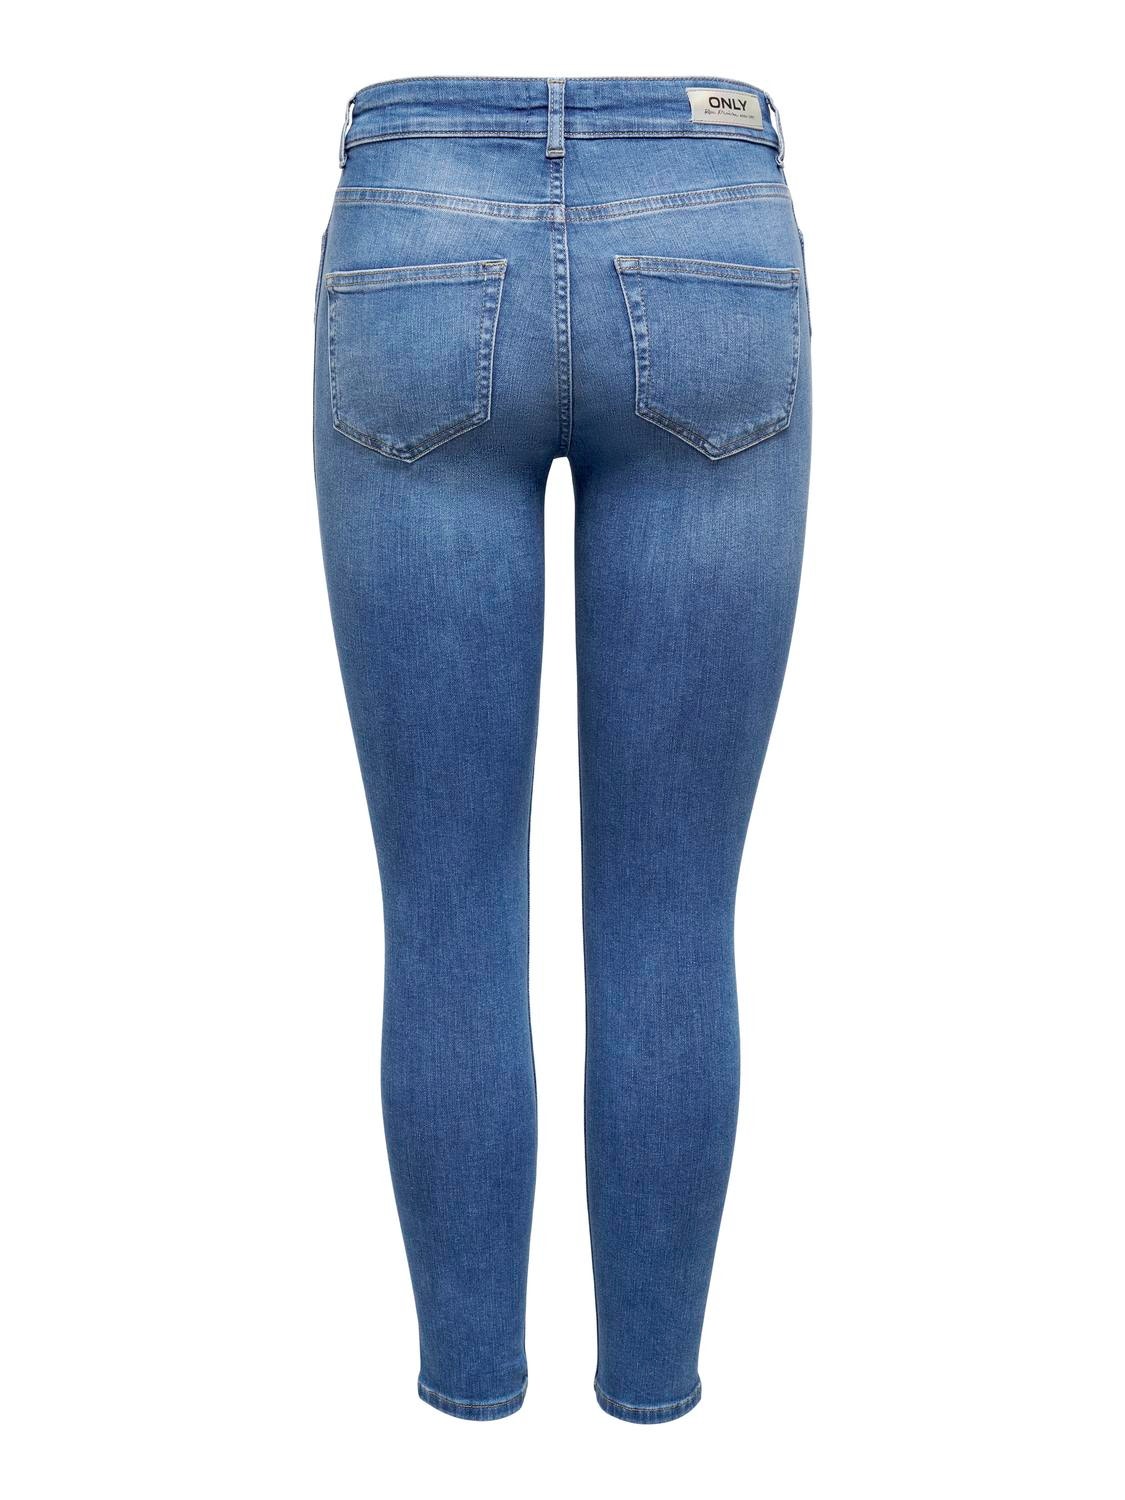 ONLY Jeans Skinny Fit Taille moyenne Ourlets déchirés -Medium Blue Denim - 15244609